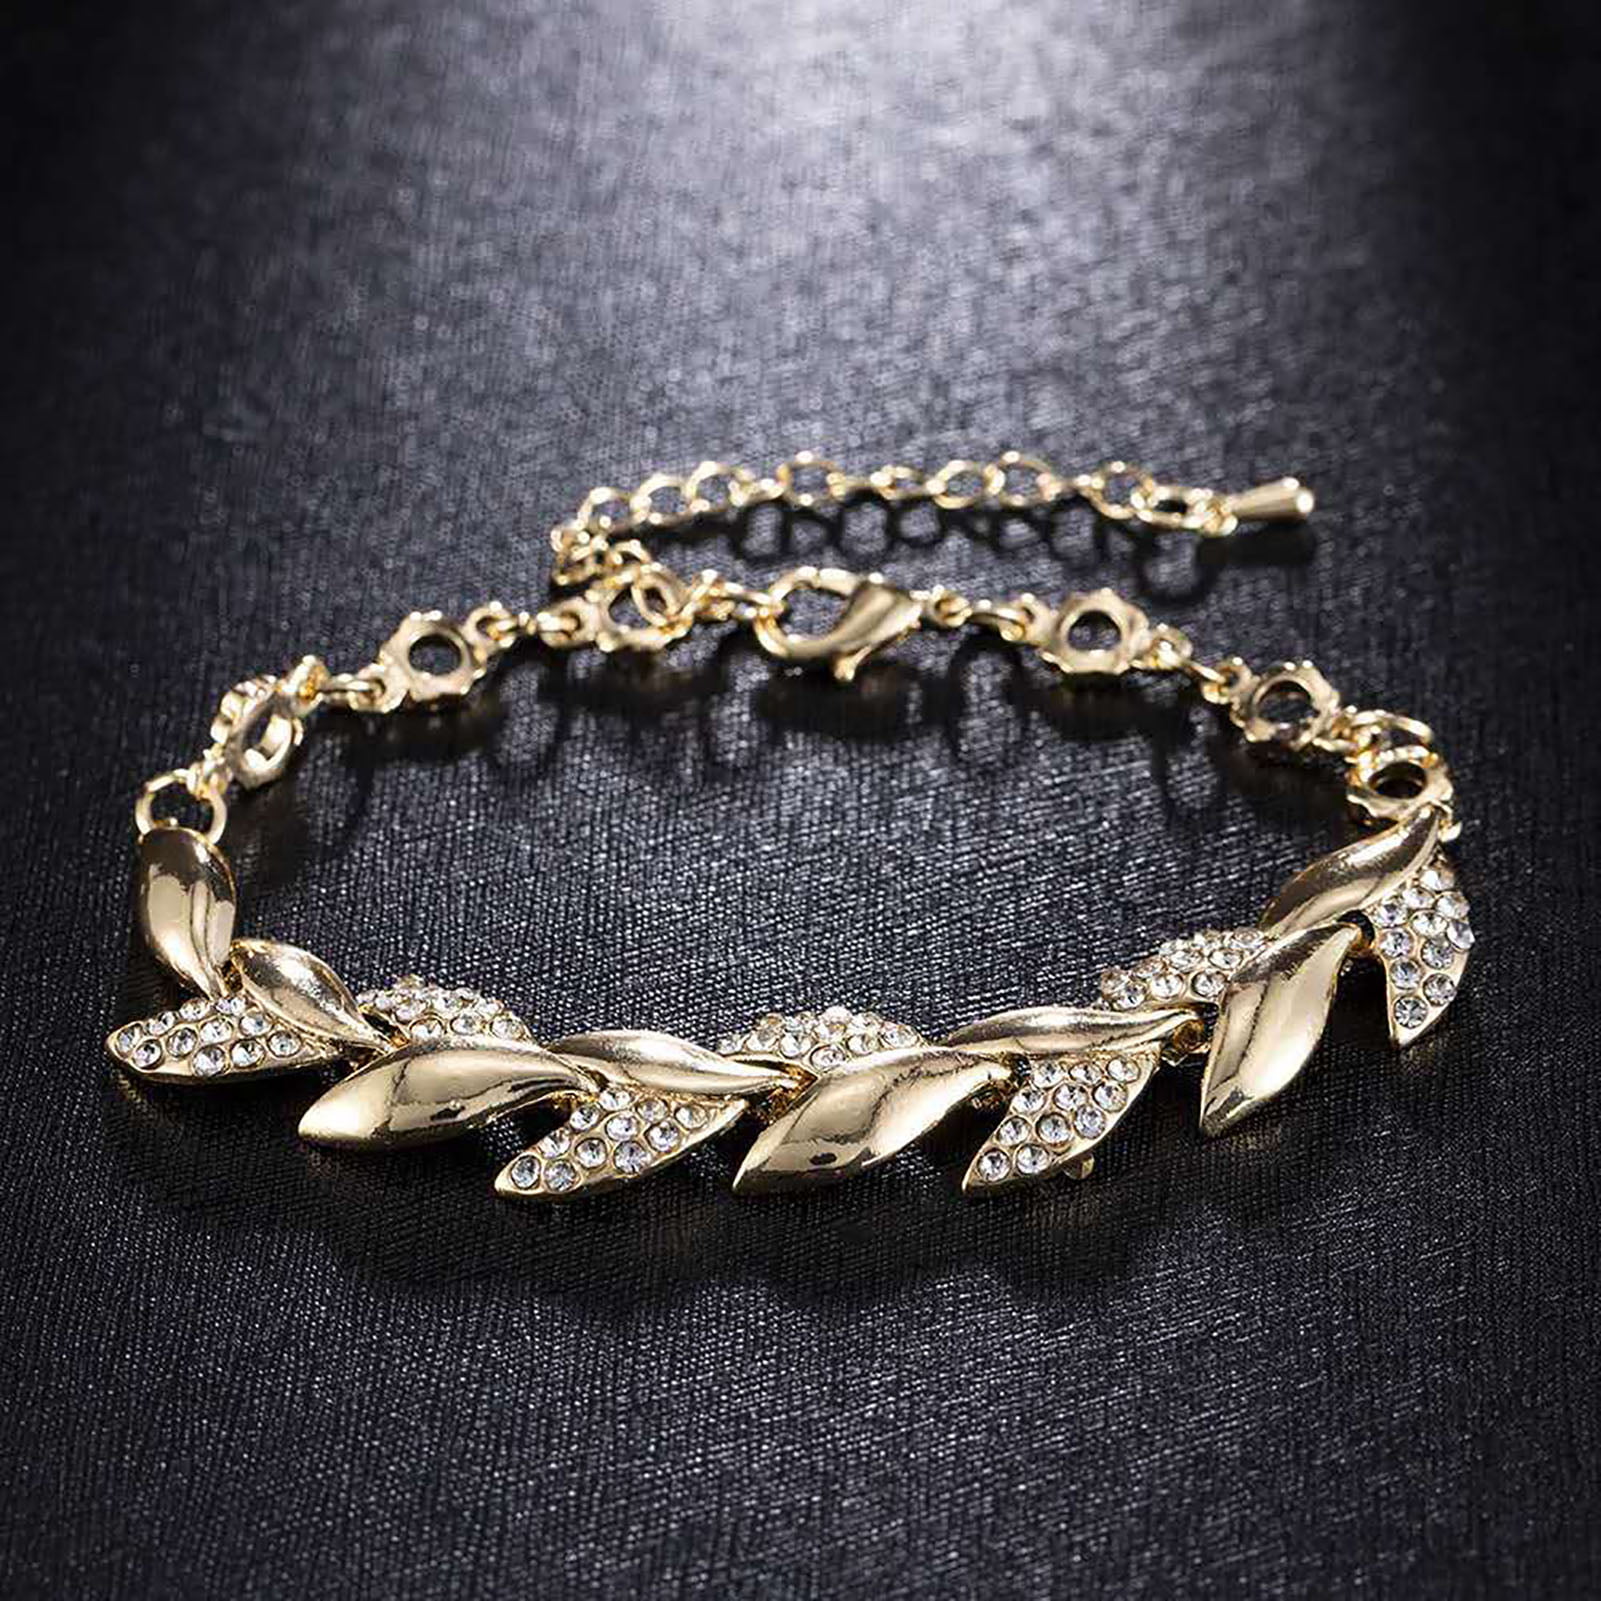 2 in Stainless Steel 4 leaf clover charm bracelet 18 cm ext plus 5 cm 7.09 in 